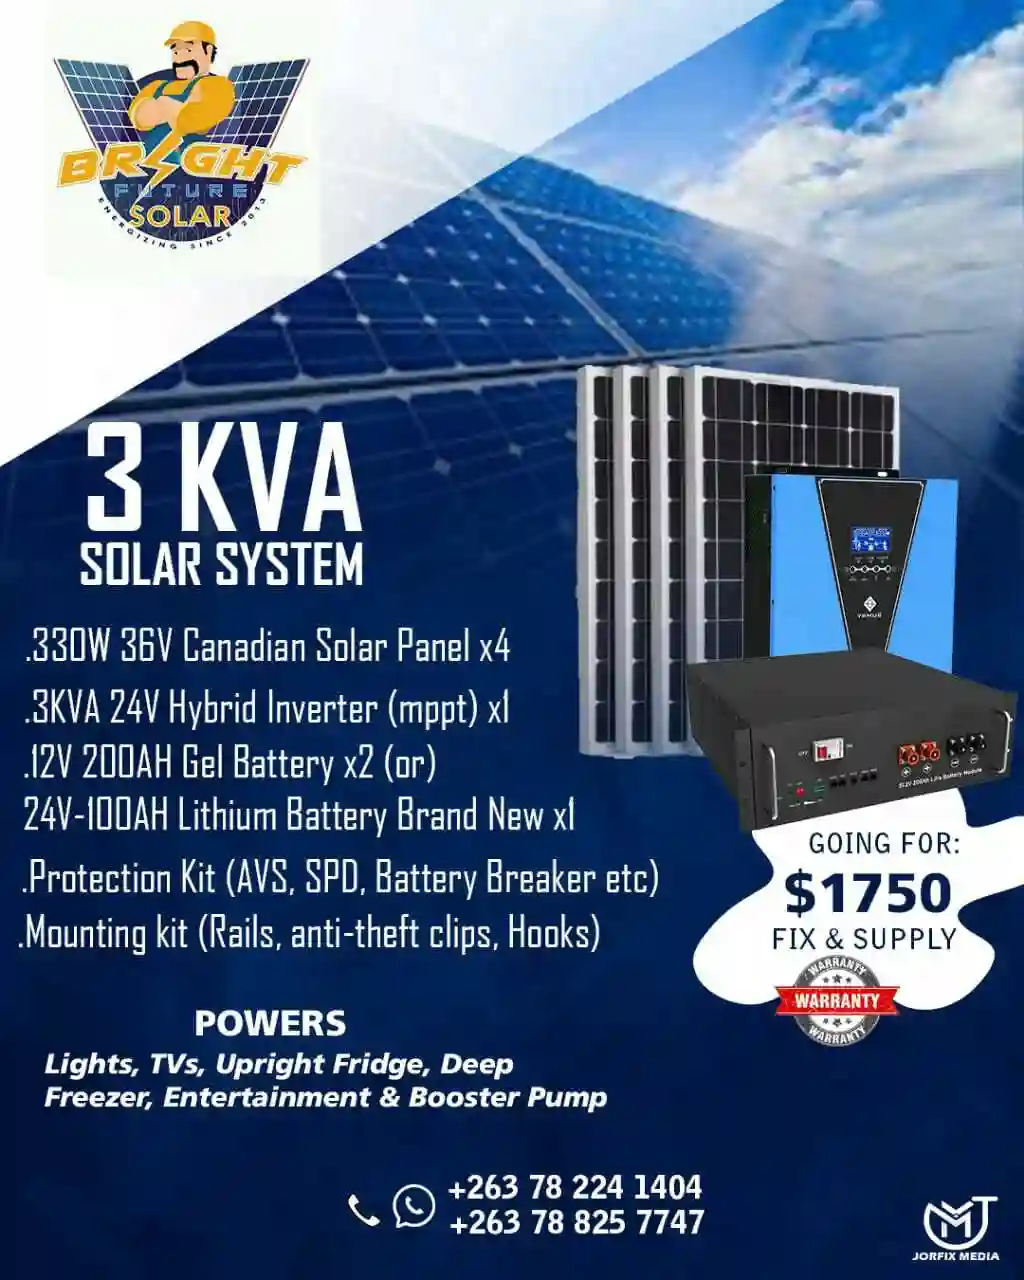 3 KVA SOLAR SYSTEM